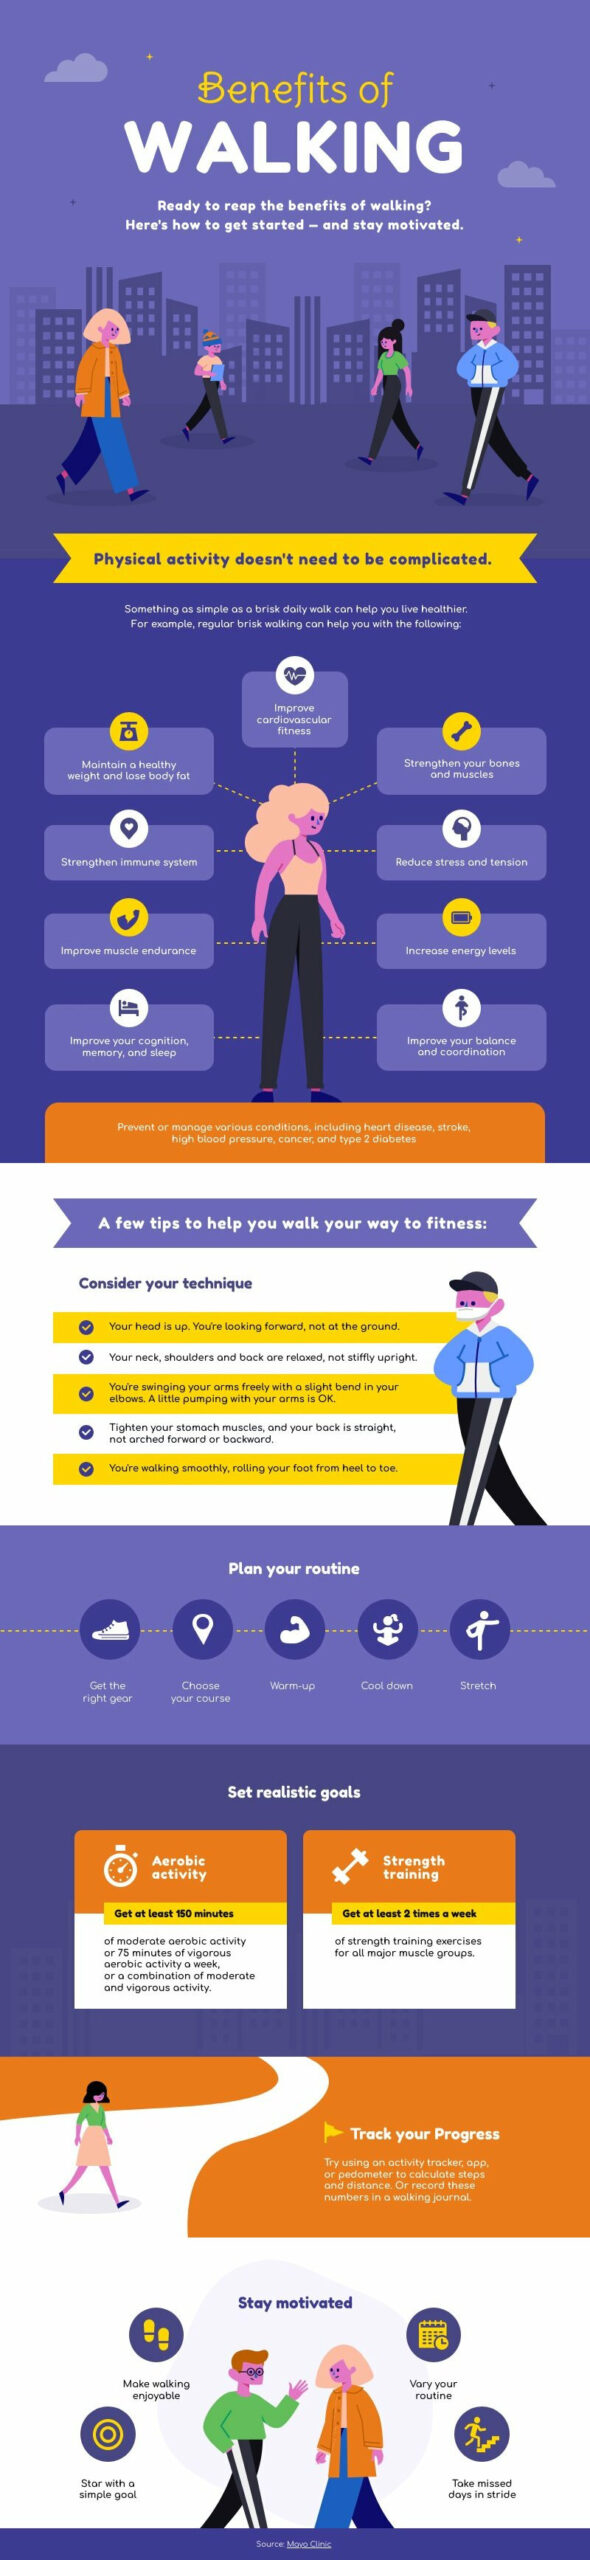 benefits of walking infographic